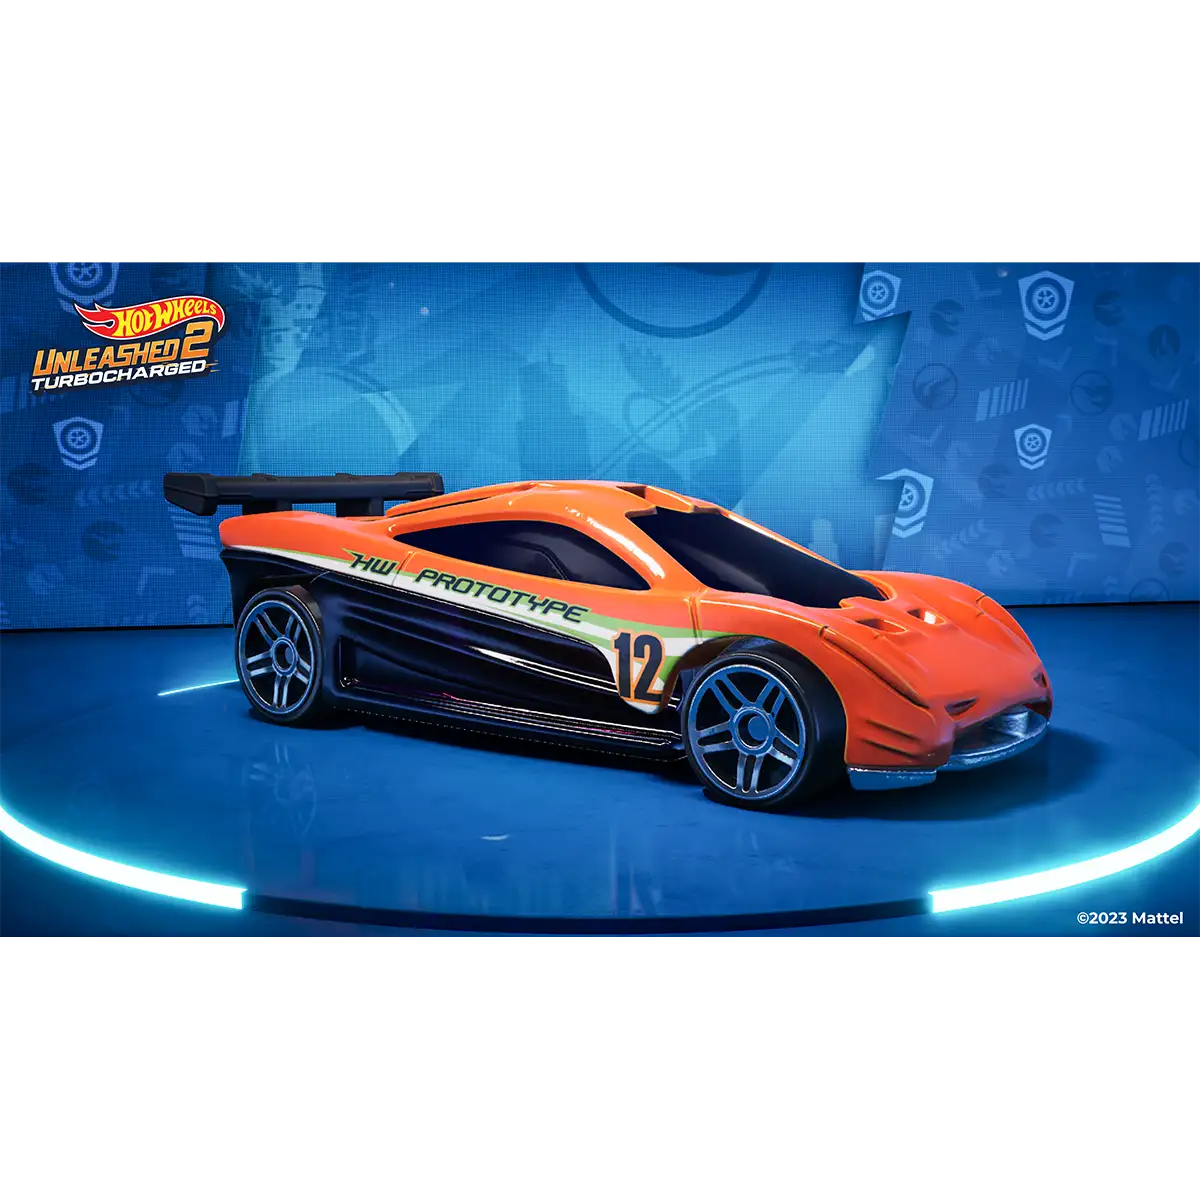 Hot Wheels Unleashed™ 2 Turbocharged (PS4) Thumbnail 4